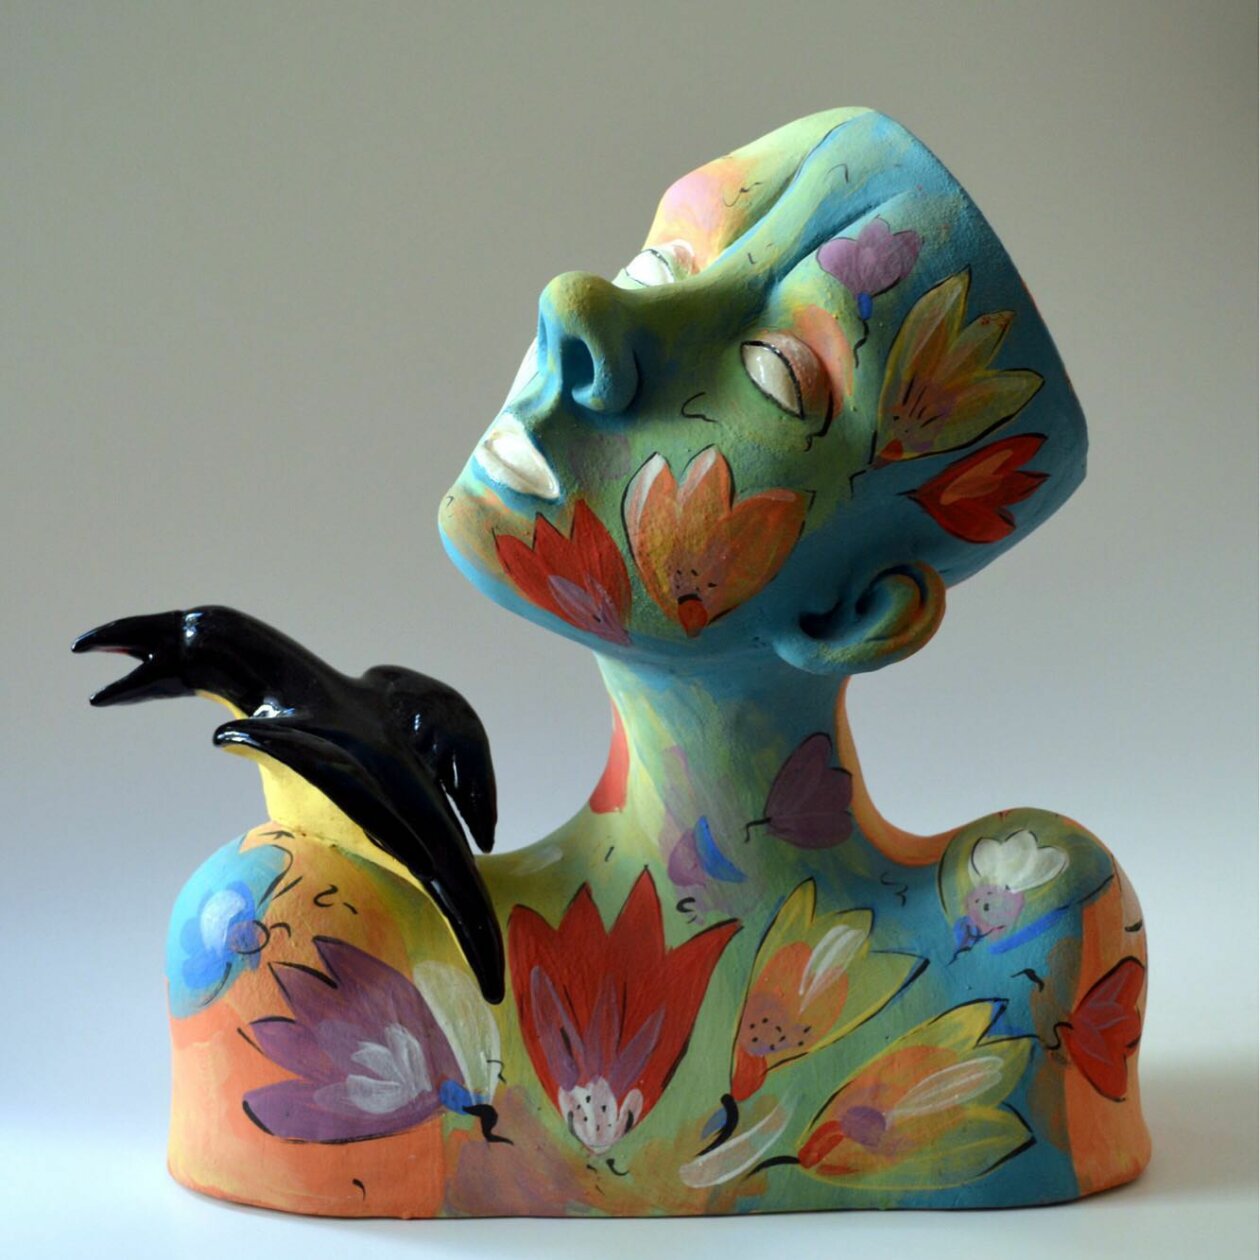 The Otherworldly Ceramic Creatures Of Inna Olshansky (1)